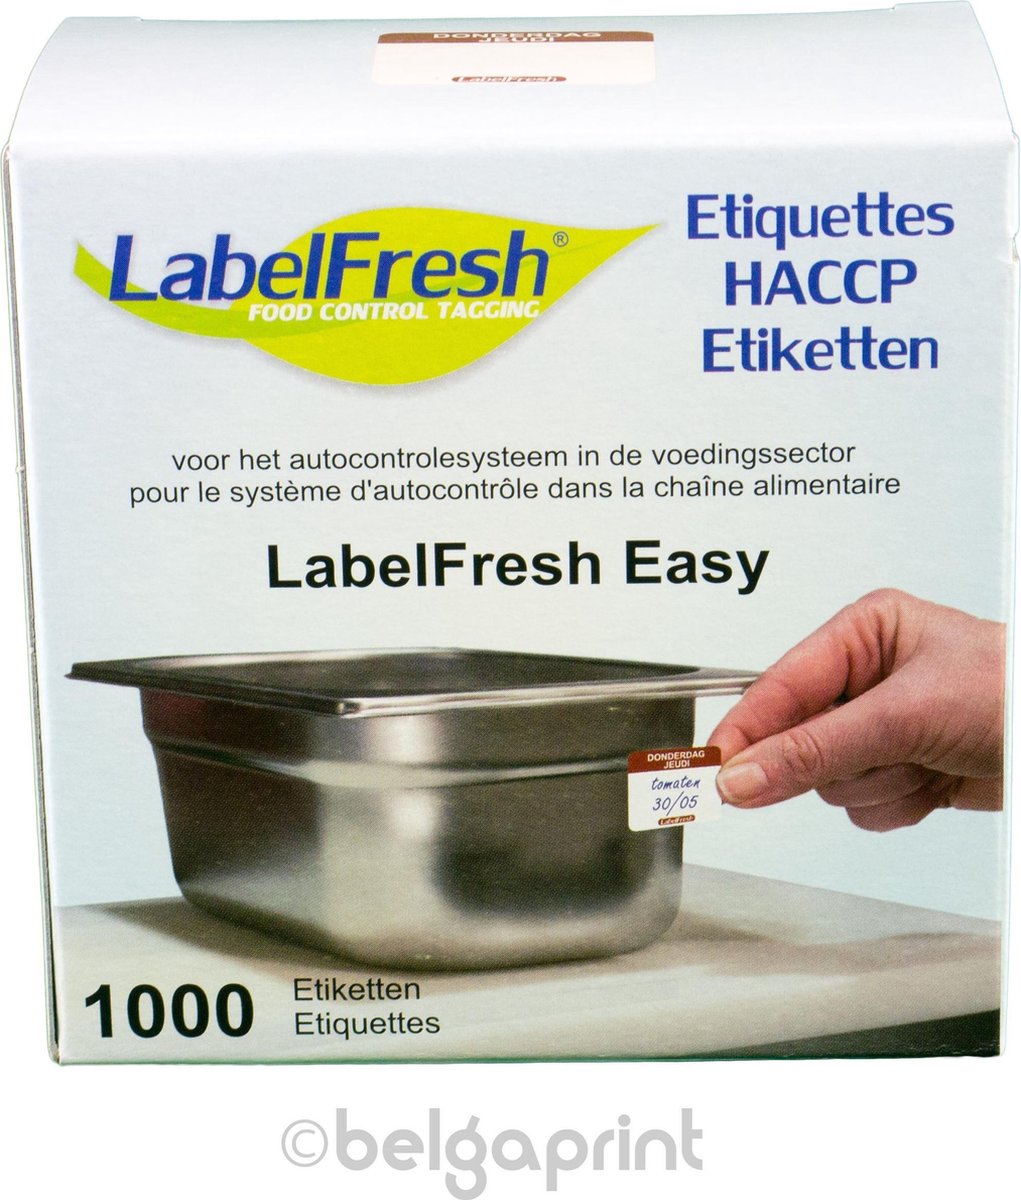 1000 LabelFresh Easy - 30x25 mm - donderdag-jeudi - HACCP etiketten / stickers